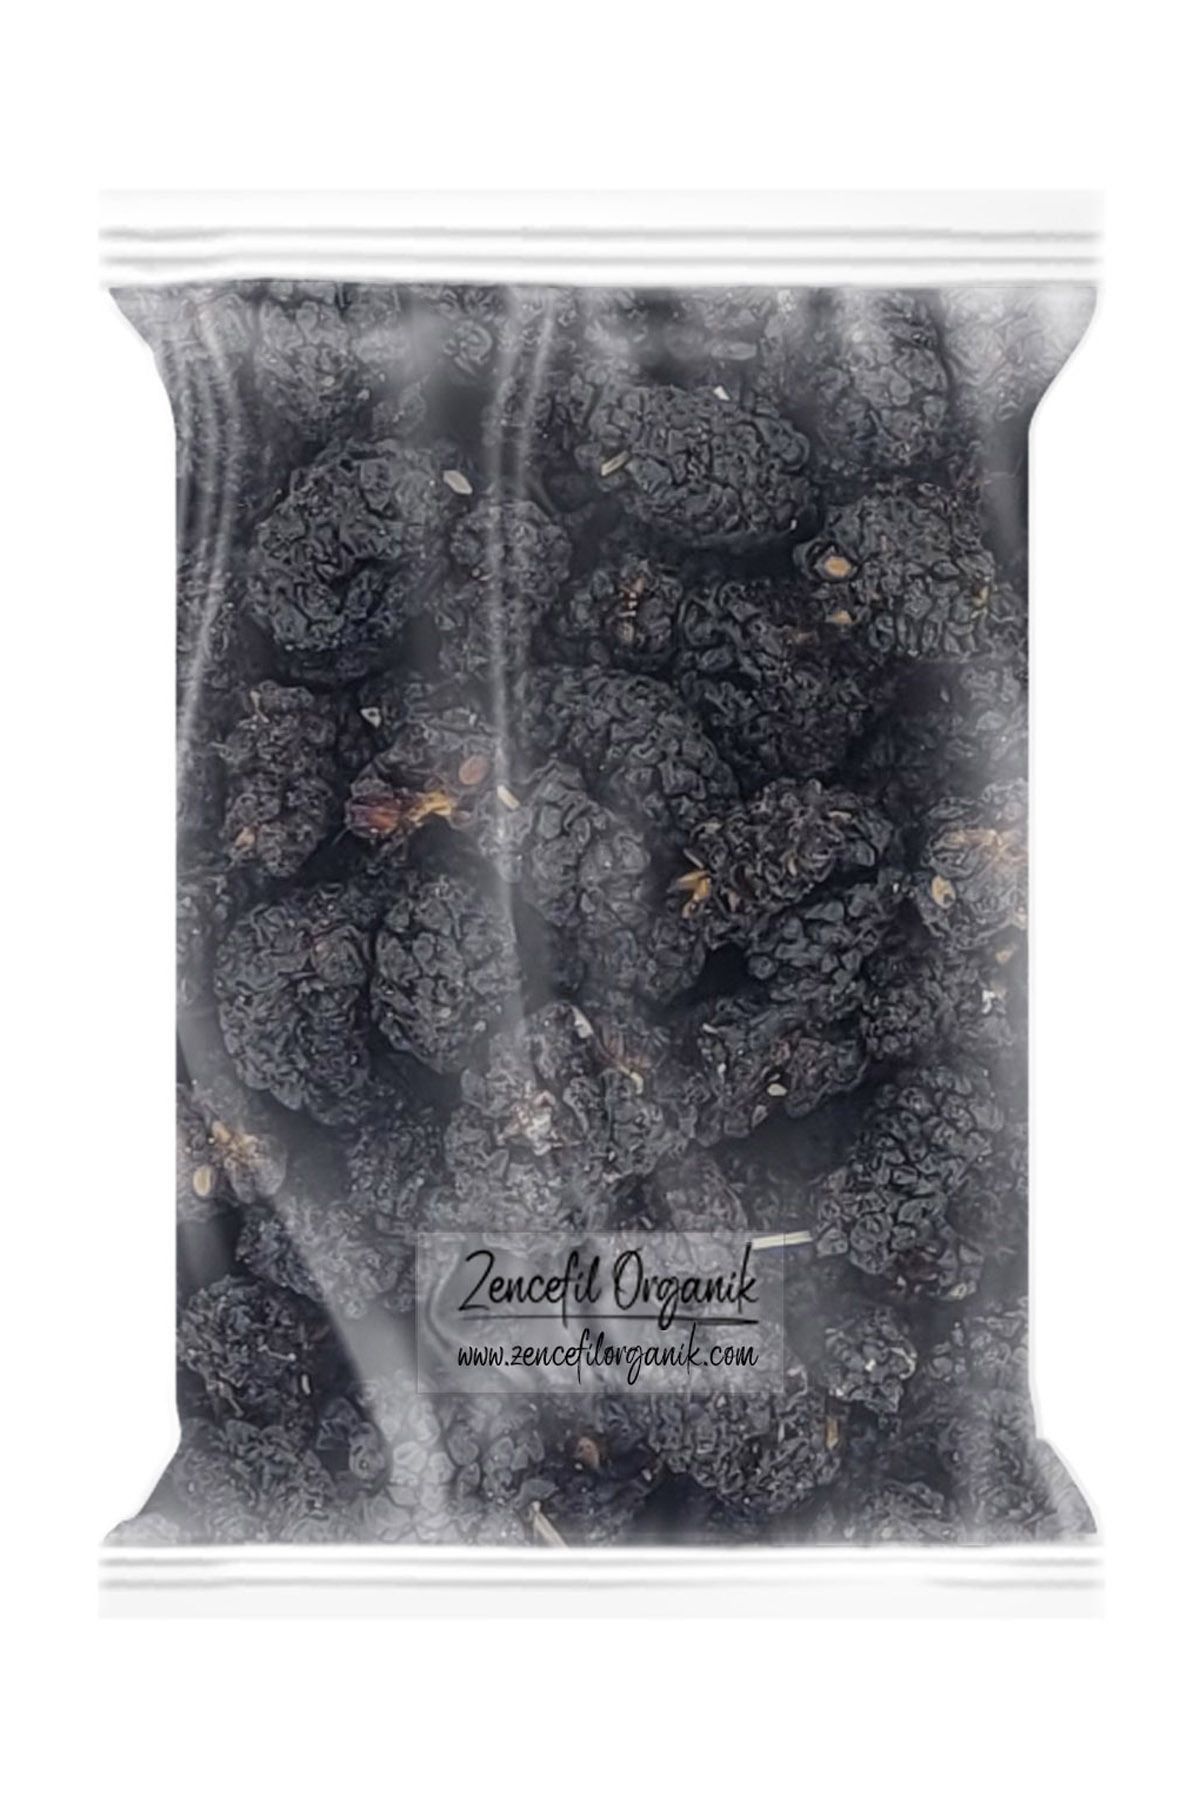 Zencefil Organik Karadut Kurusu Black Mulberry Dut Kurusu 500 Gr. Siyah Kuru Dut Yeni Mahsül Doğal Kurutma 0,5 Kg